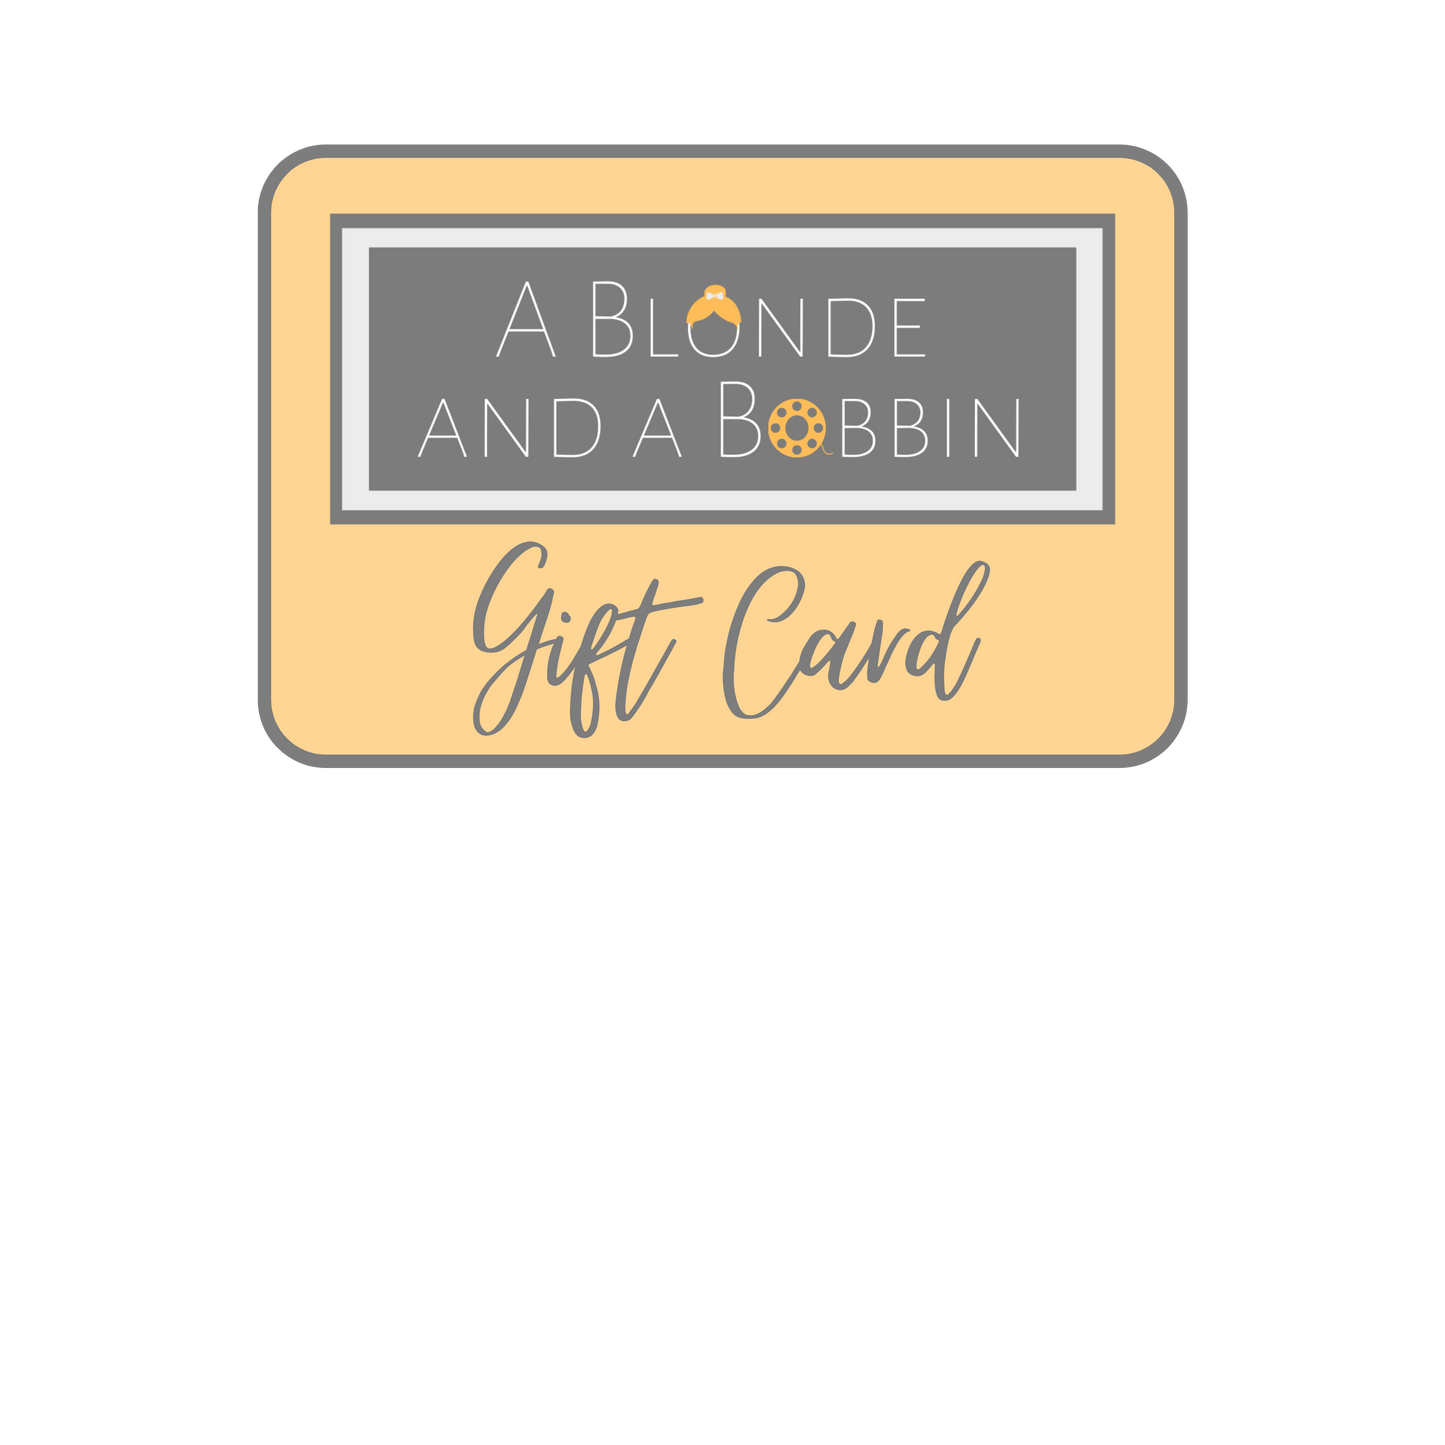 A Blonde and a Bobbin Gift Card